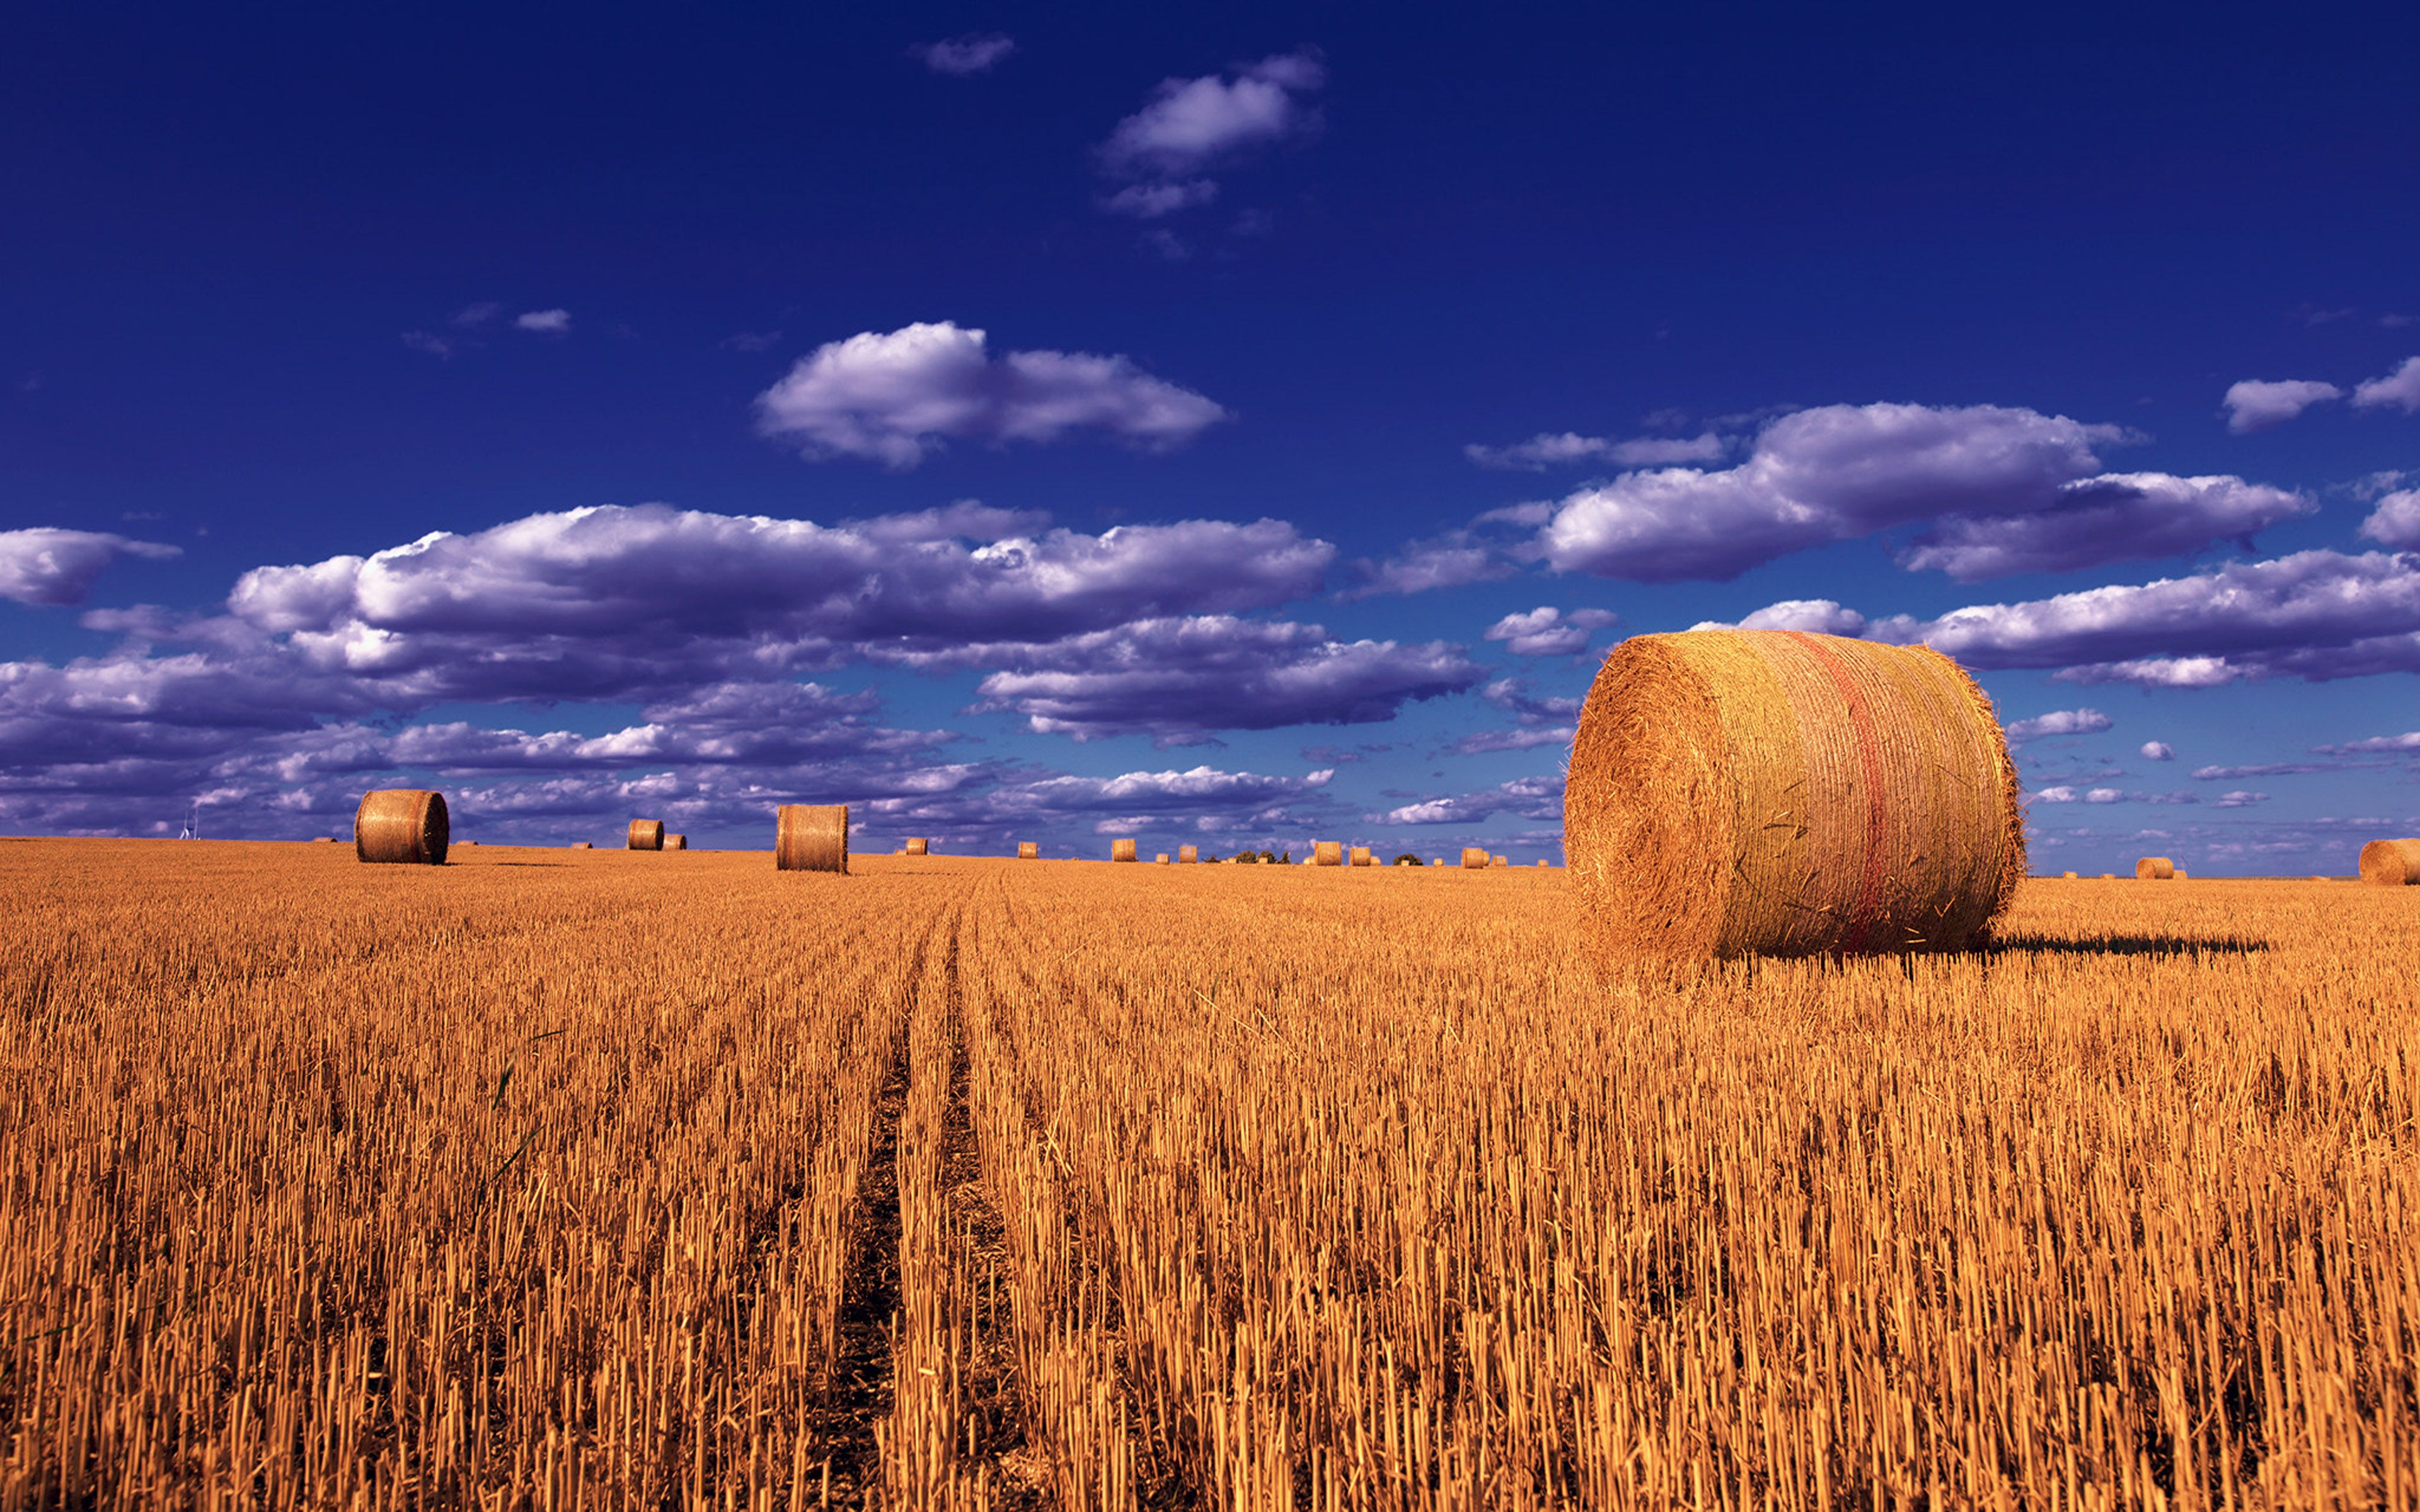 Straw Balls Wheat Field Sky So Clouds Montana Photo Landscape